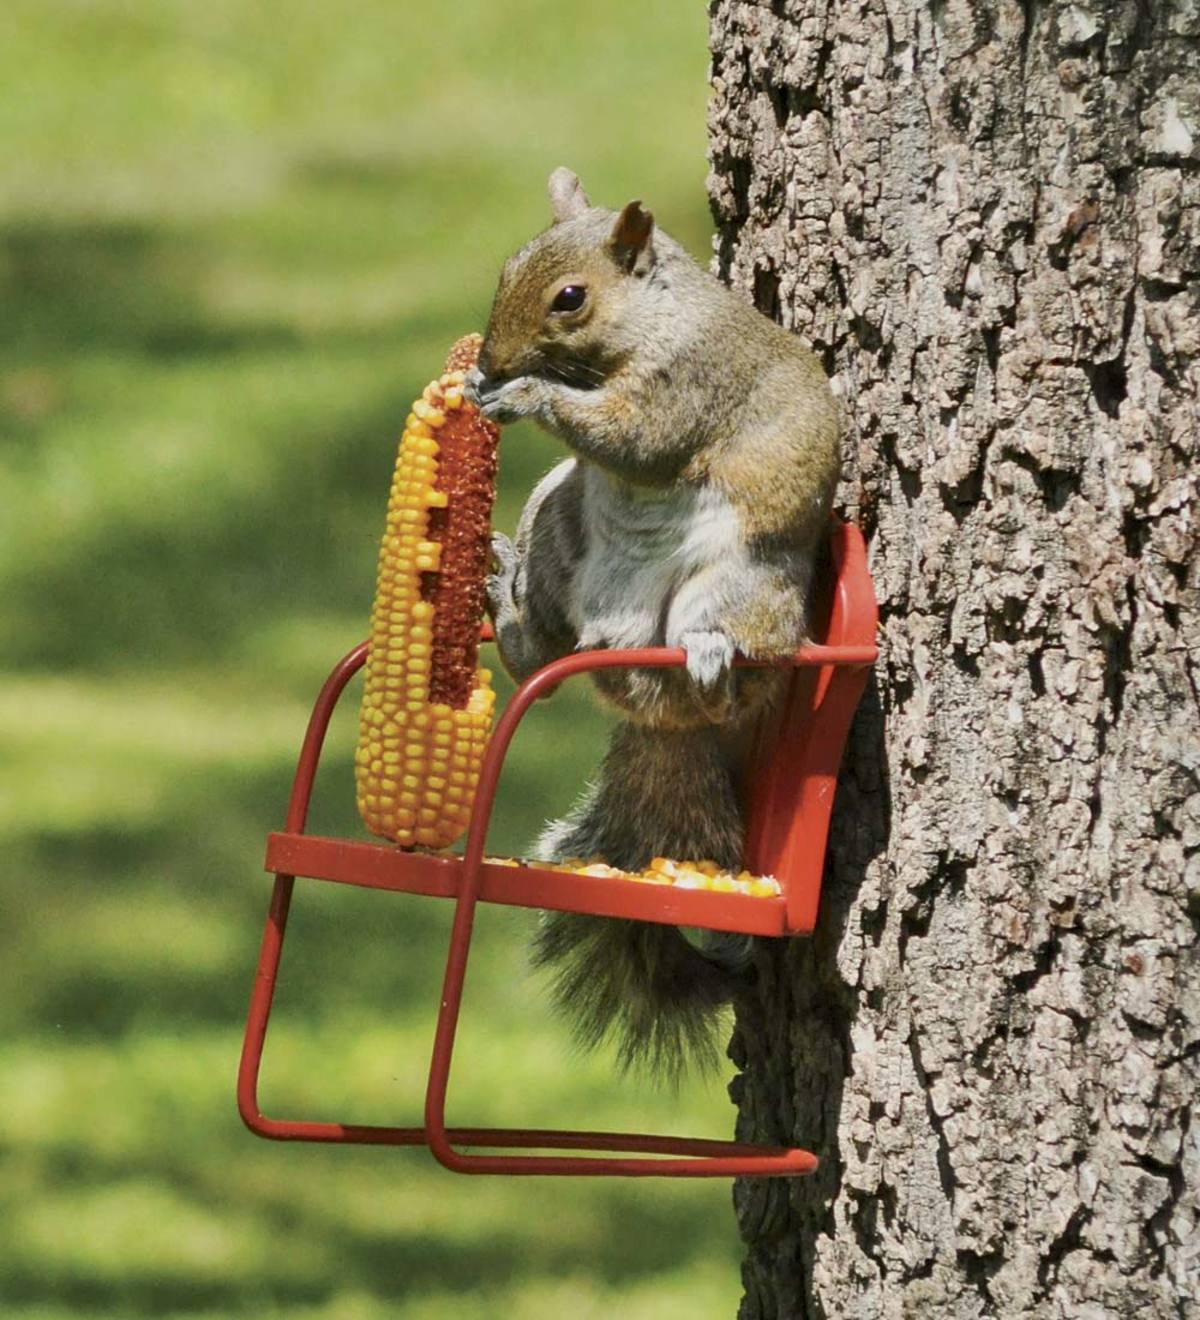 Red Retro Metal Lawn Chair Squirrel Feeder